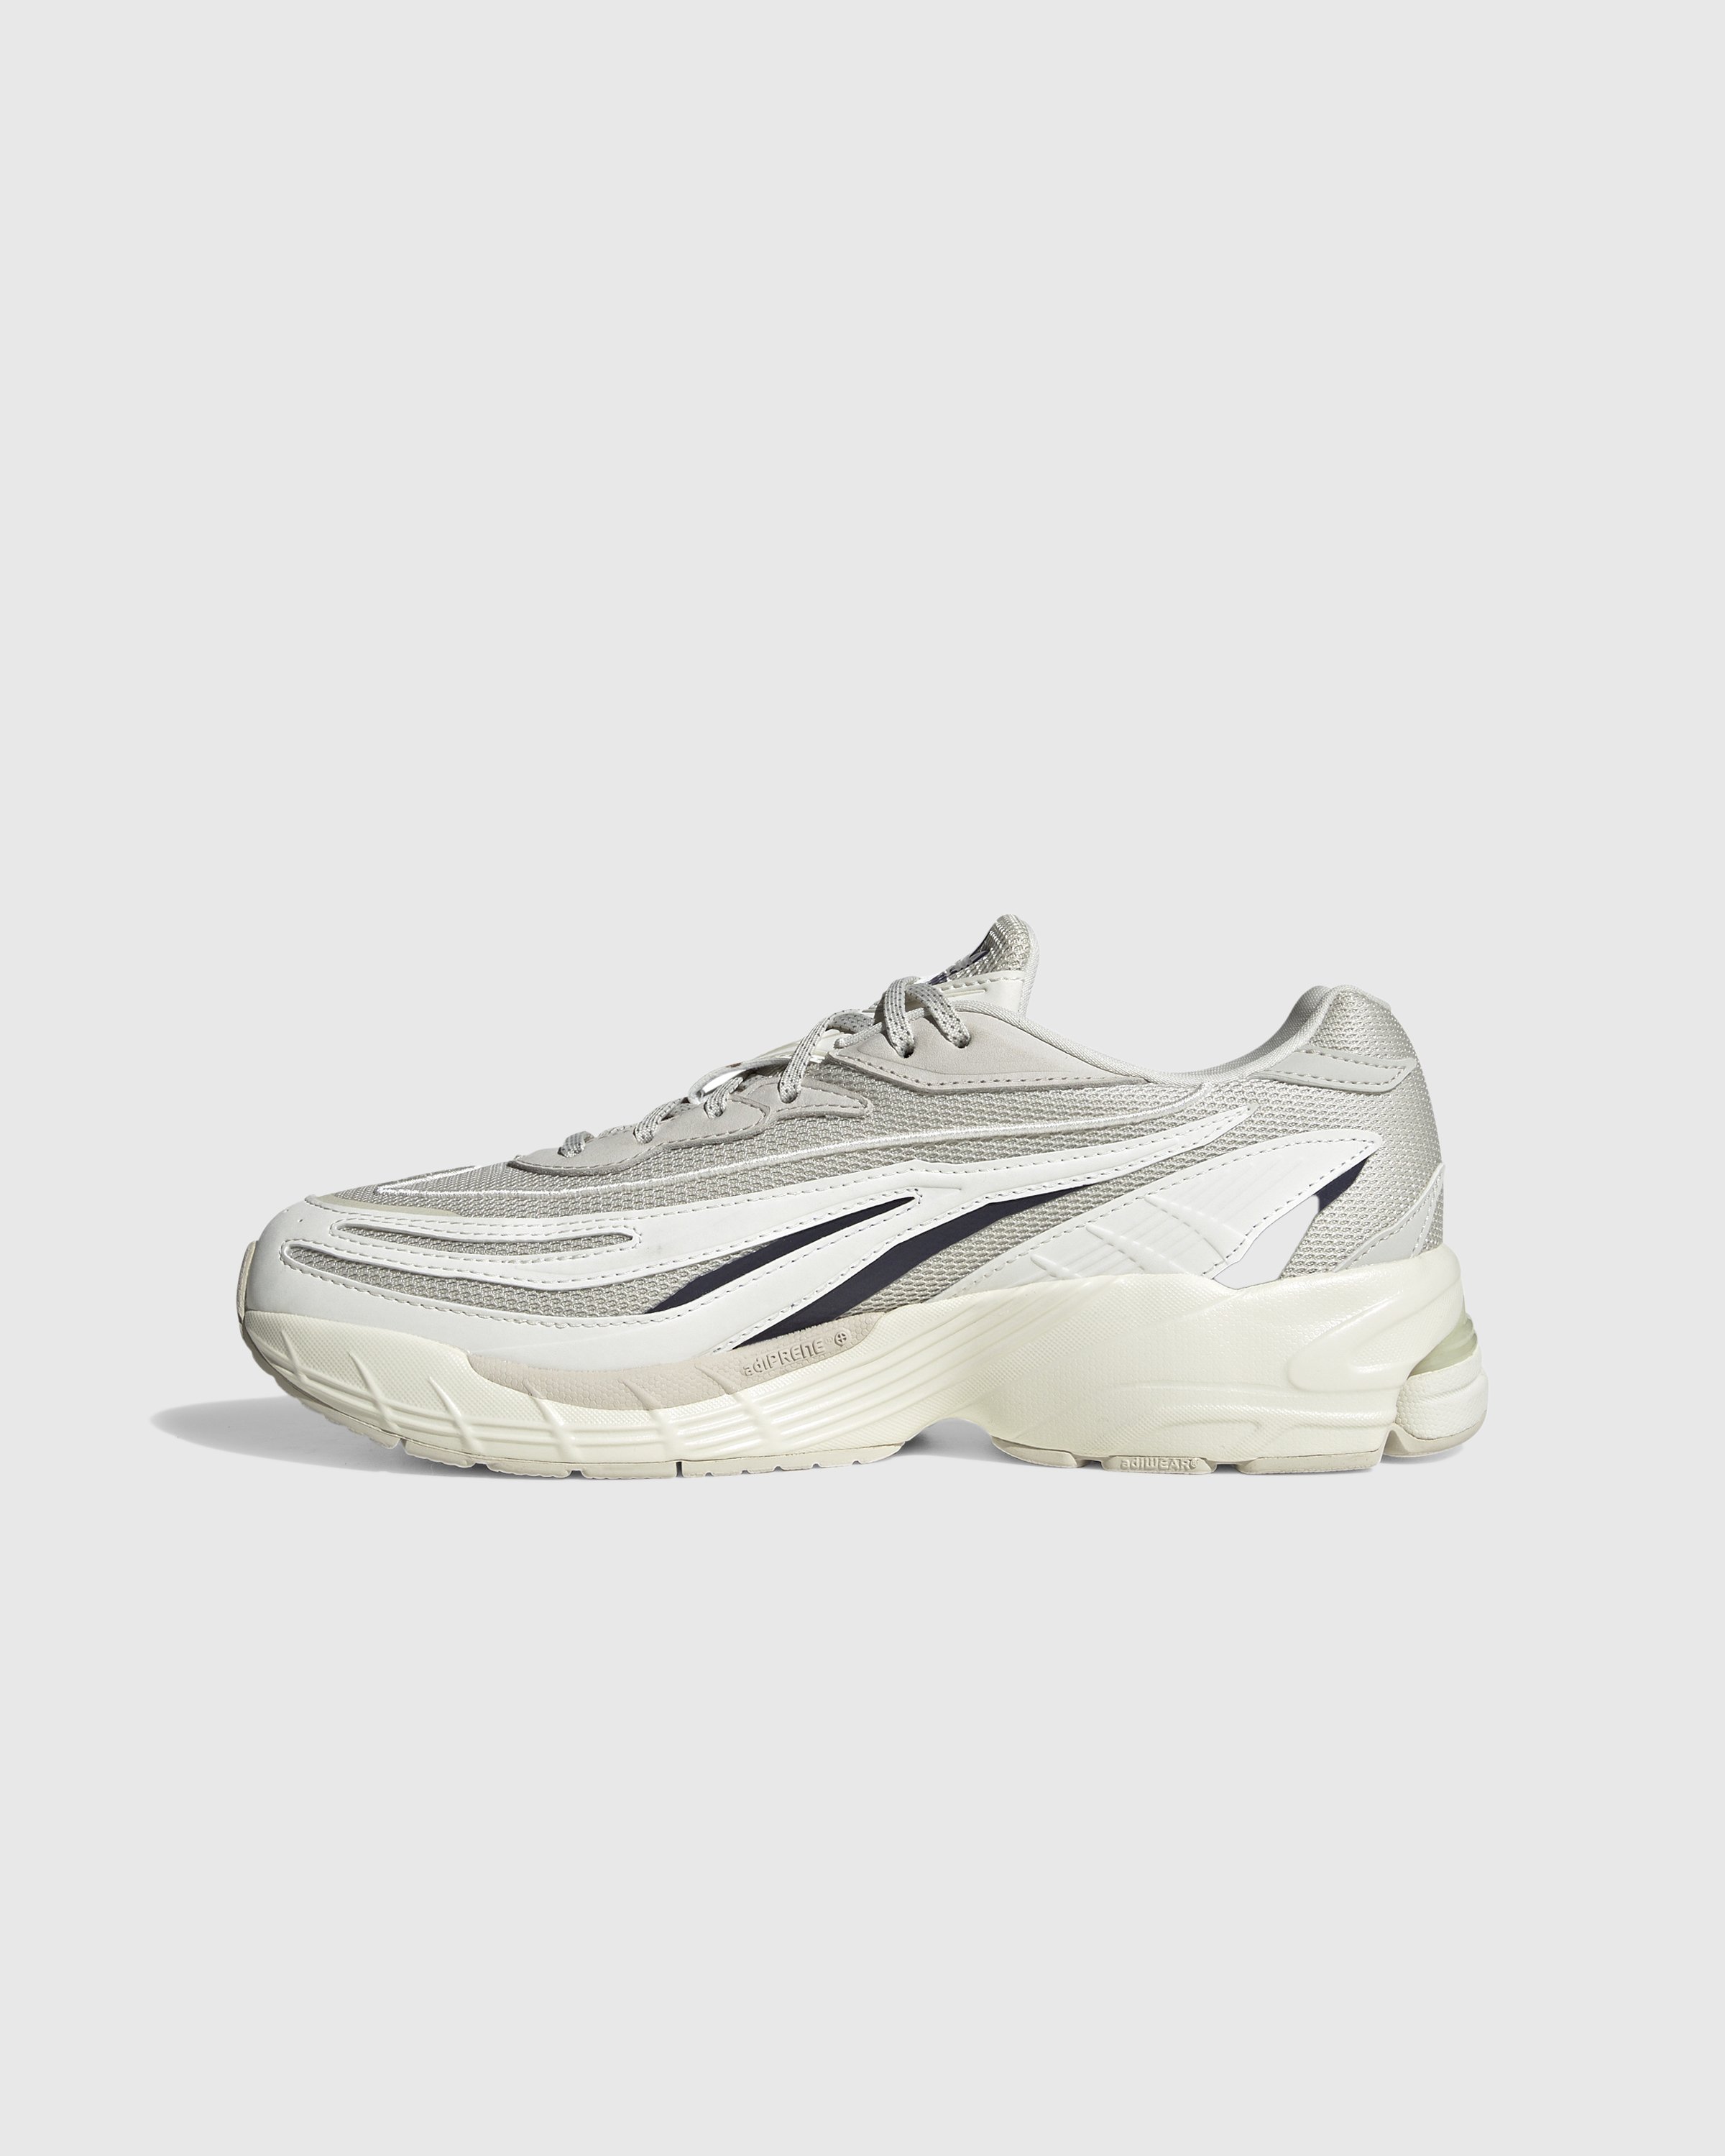 Adidas - Orketro Aluminum/White - Footwear - Grey - Image 2